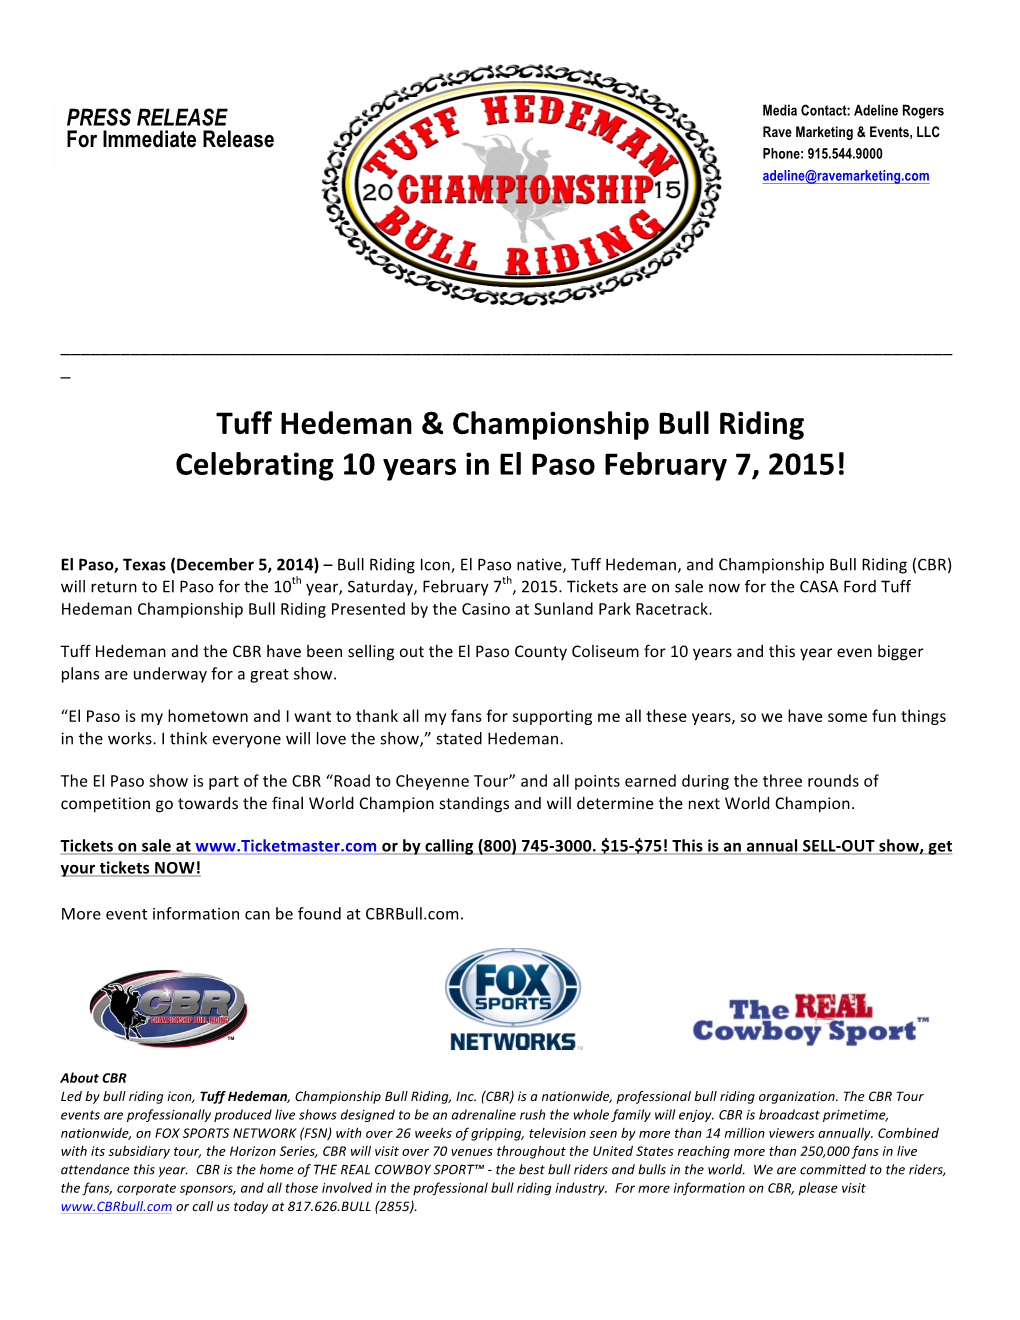 Tuff Hedeman & Championship Bull Riding Celebrating 10 Years in El